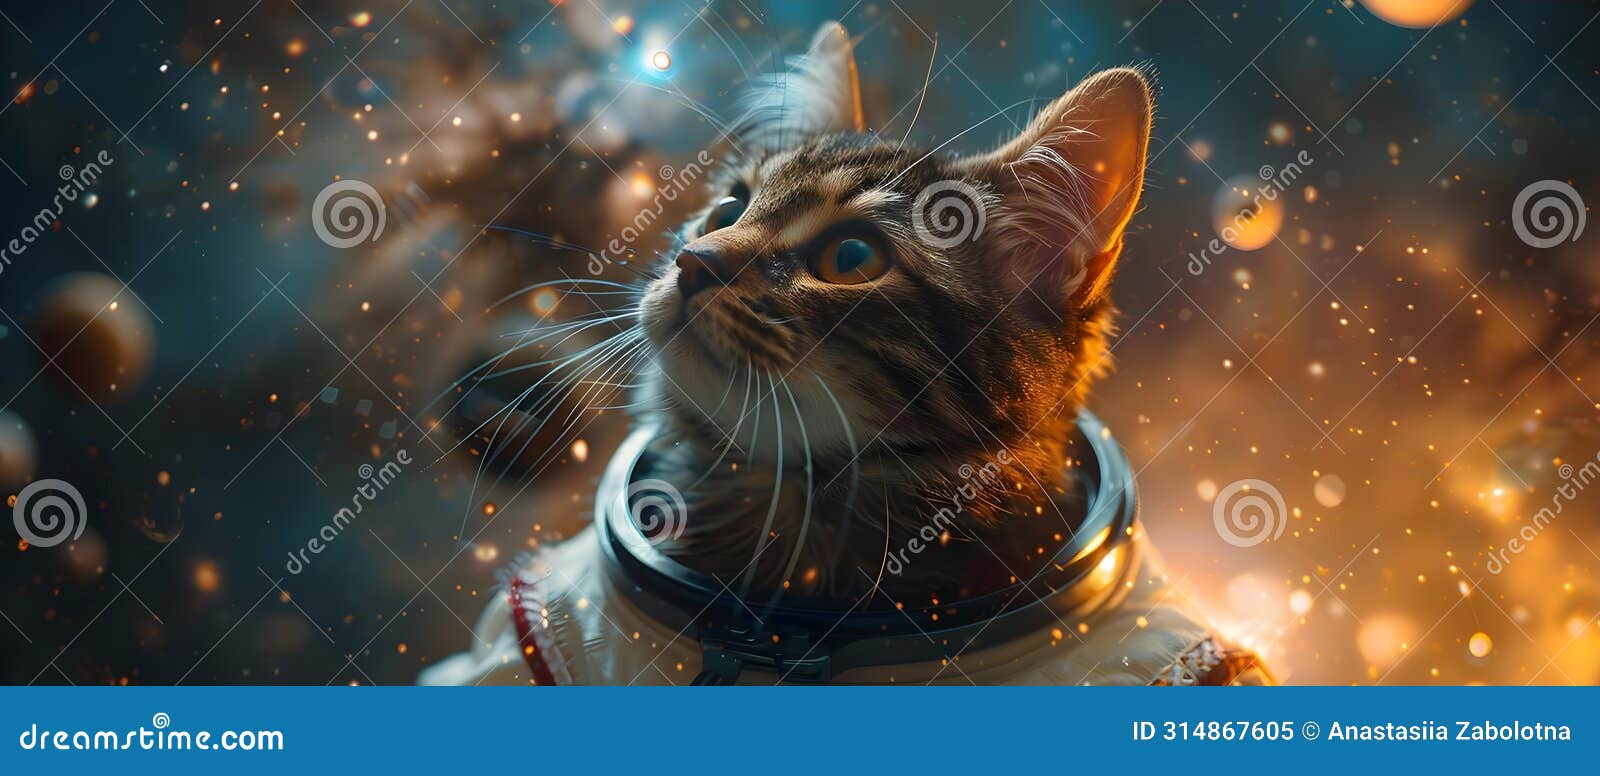 cosmic feline explorer amidst starry vistas. concept sci-fi cats, space adventure, galactic